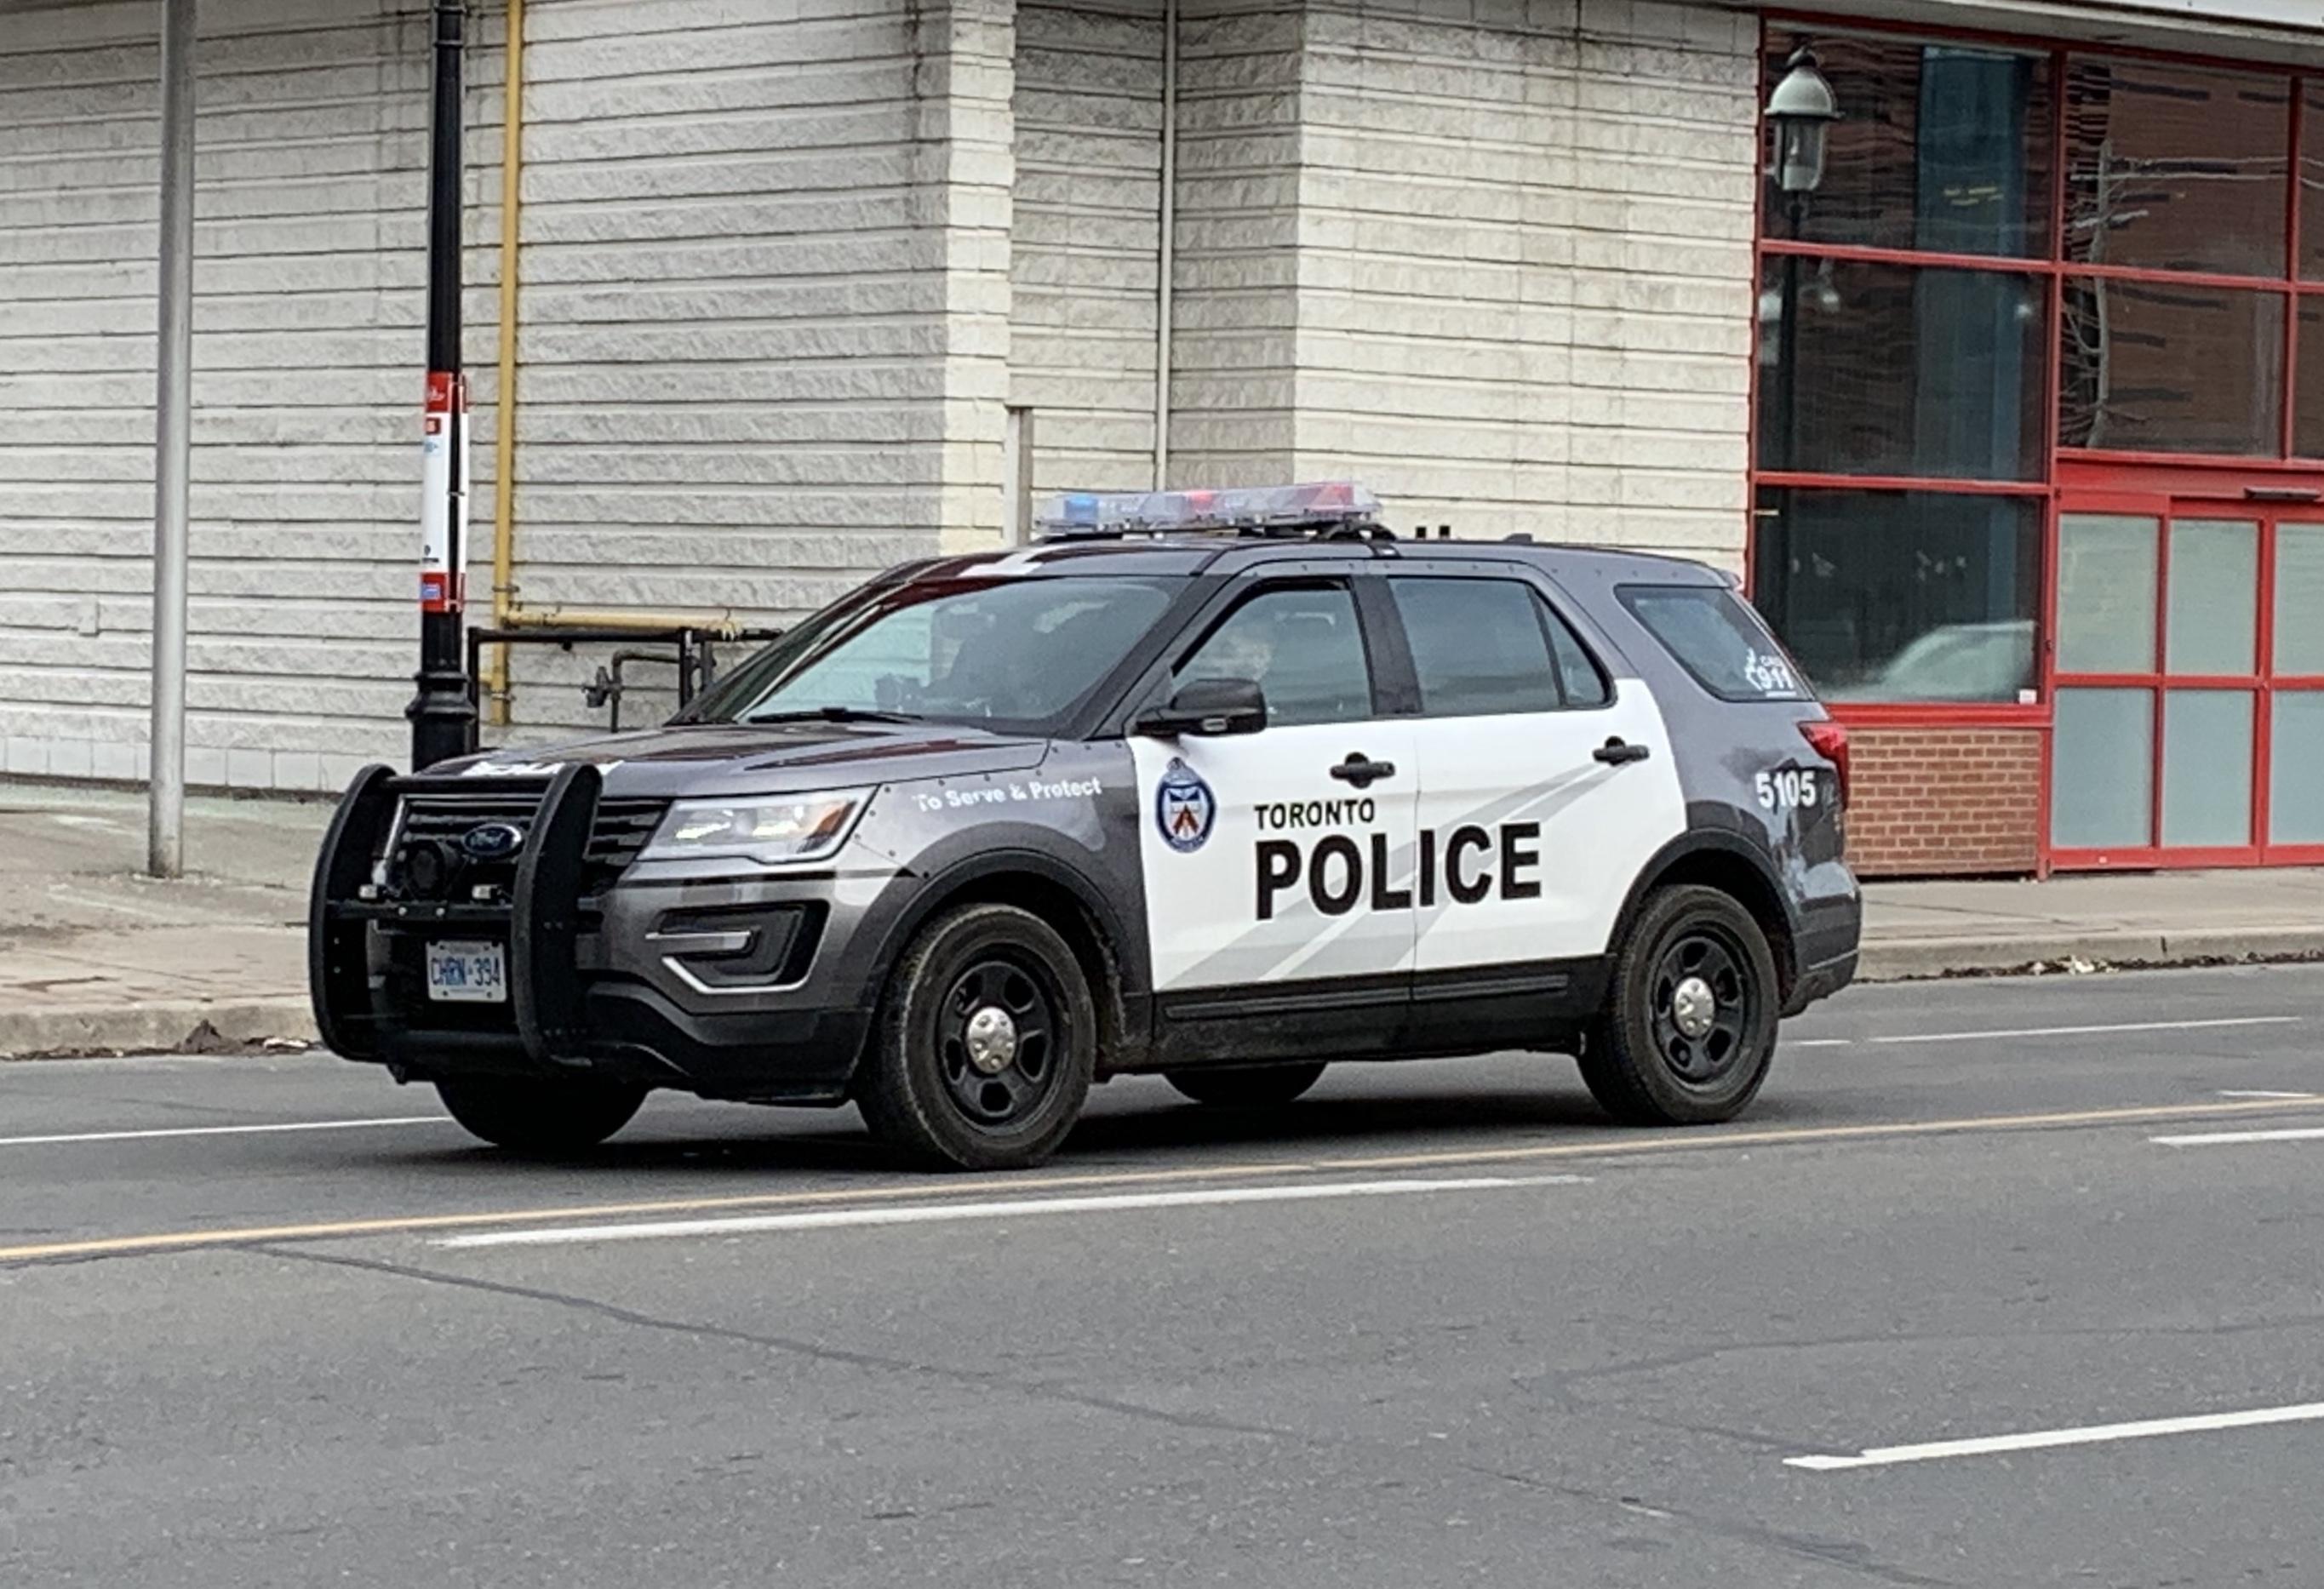 Toronto Police 5105